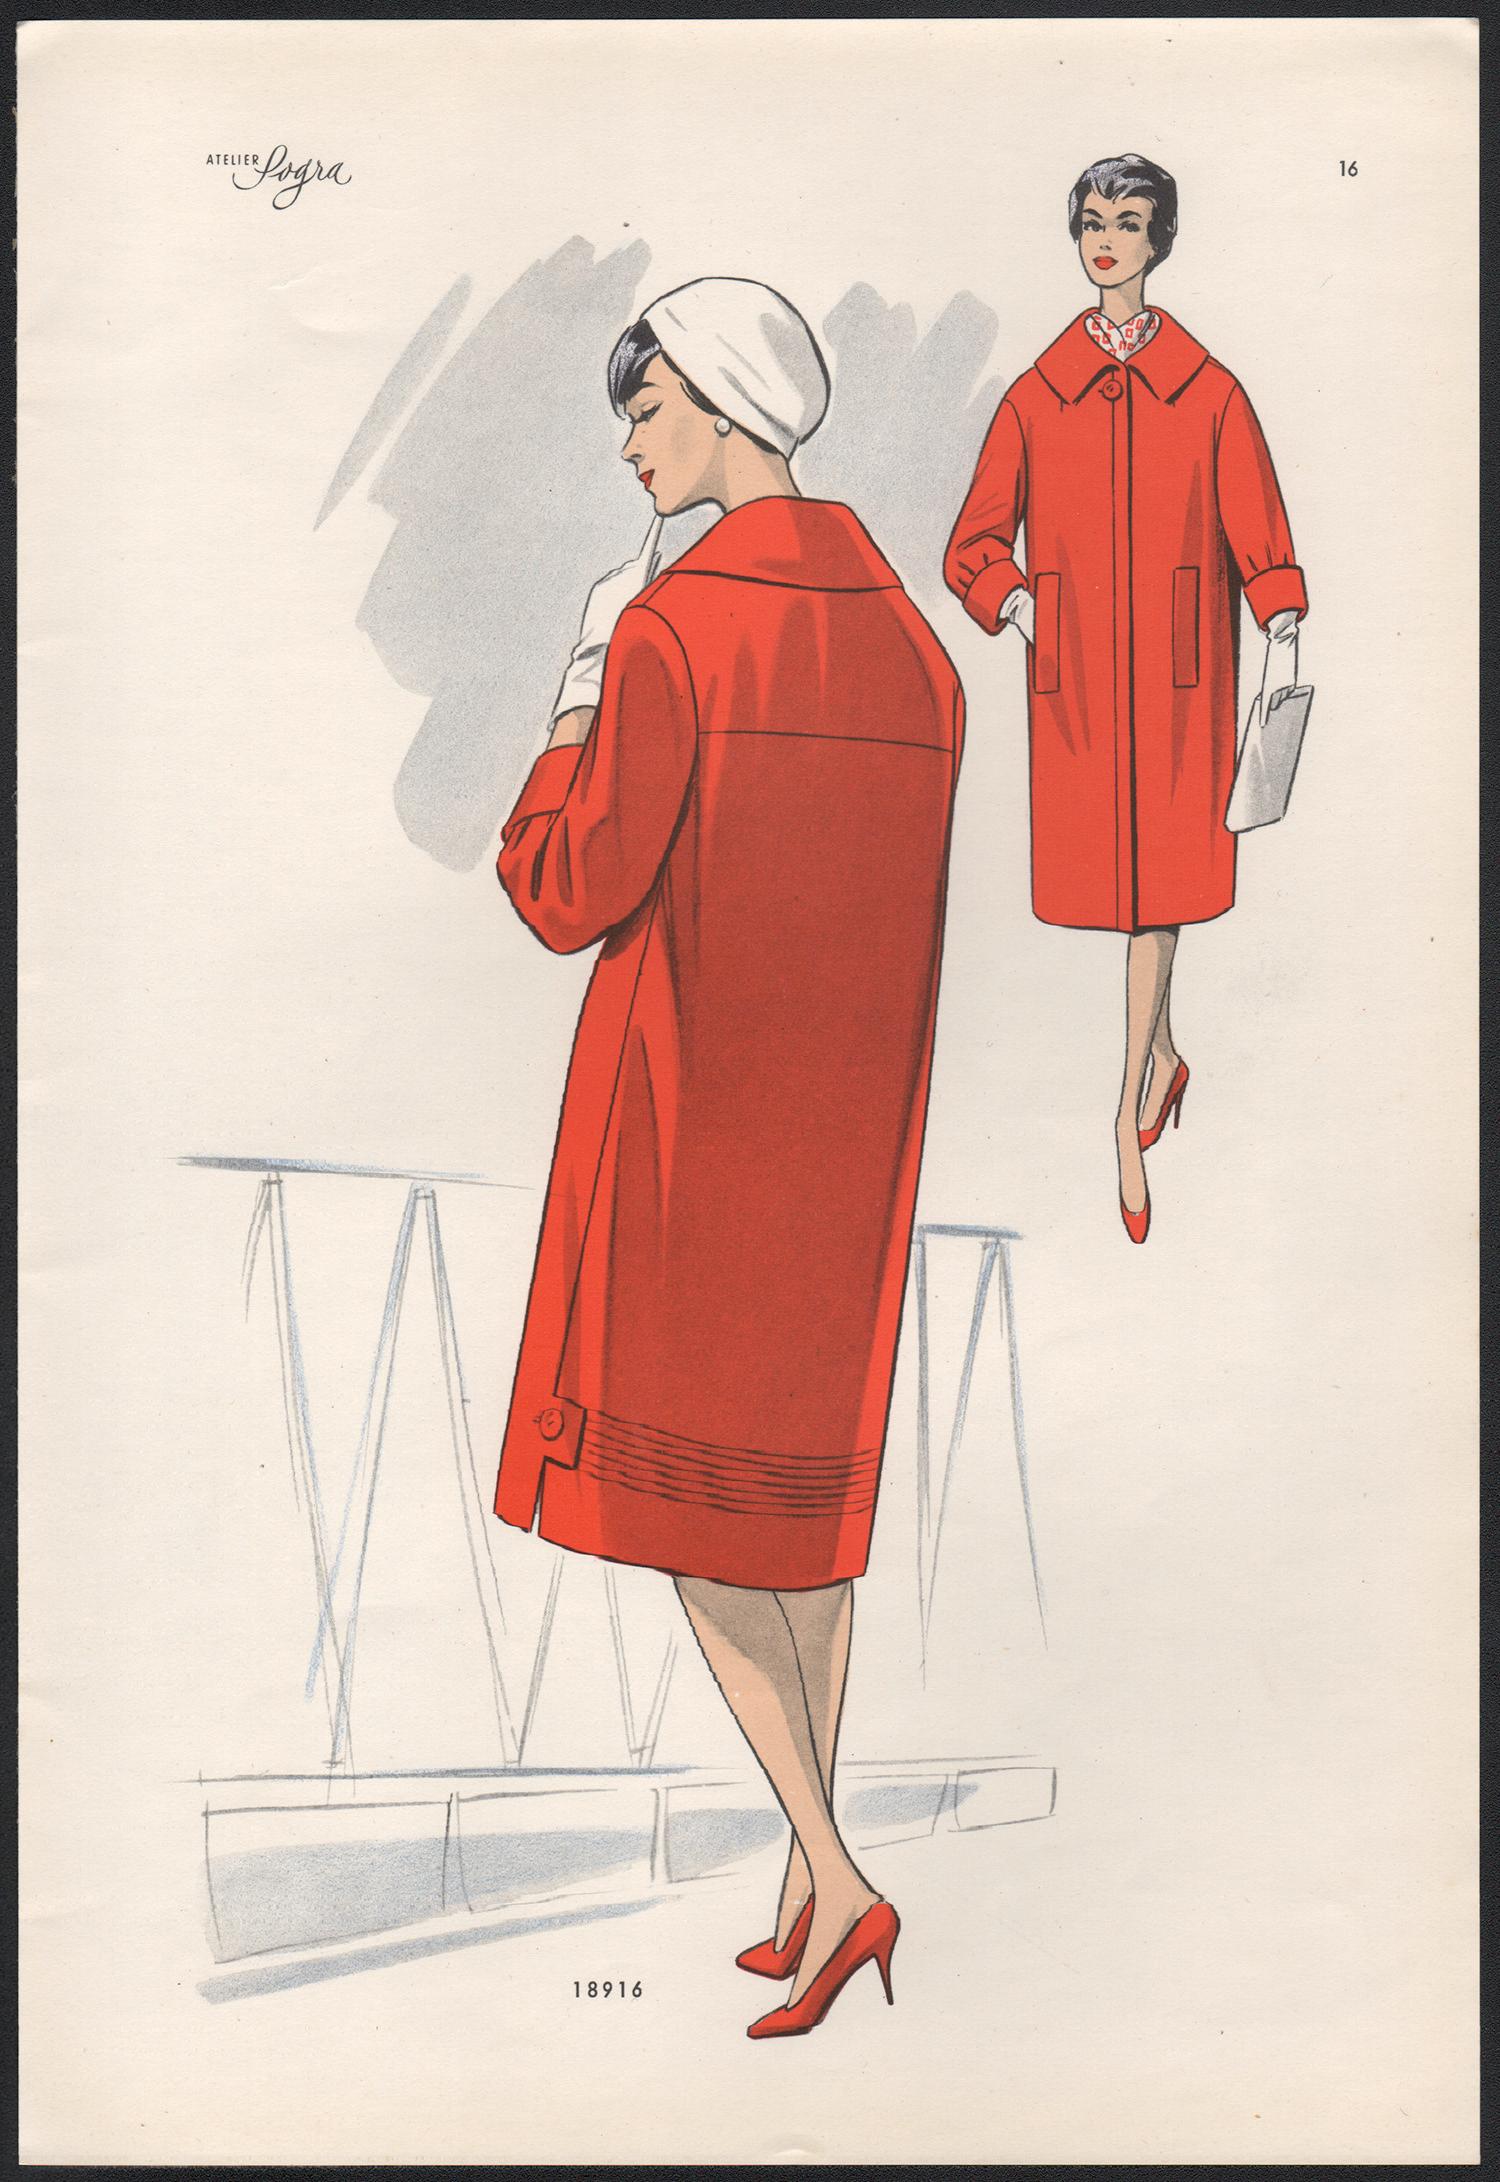 Unknown Figurative Print - European Mid-Century 1959 Fashion Design Vintage Lithograph Print